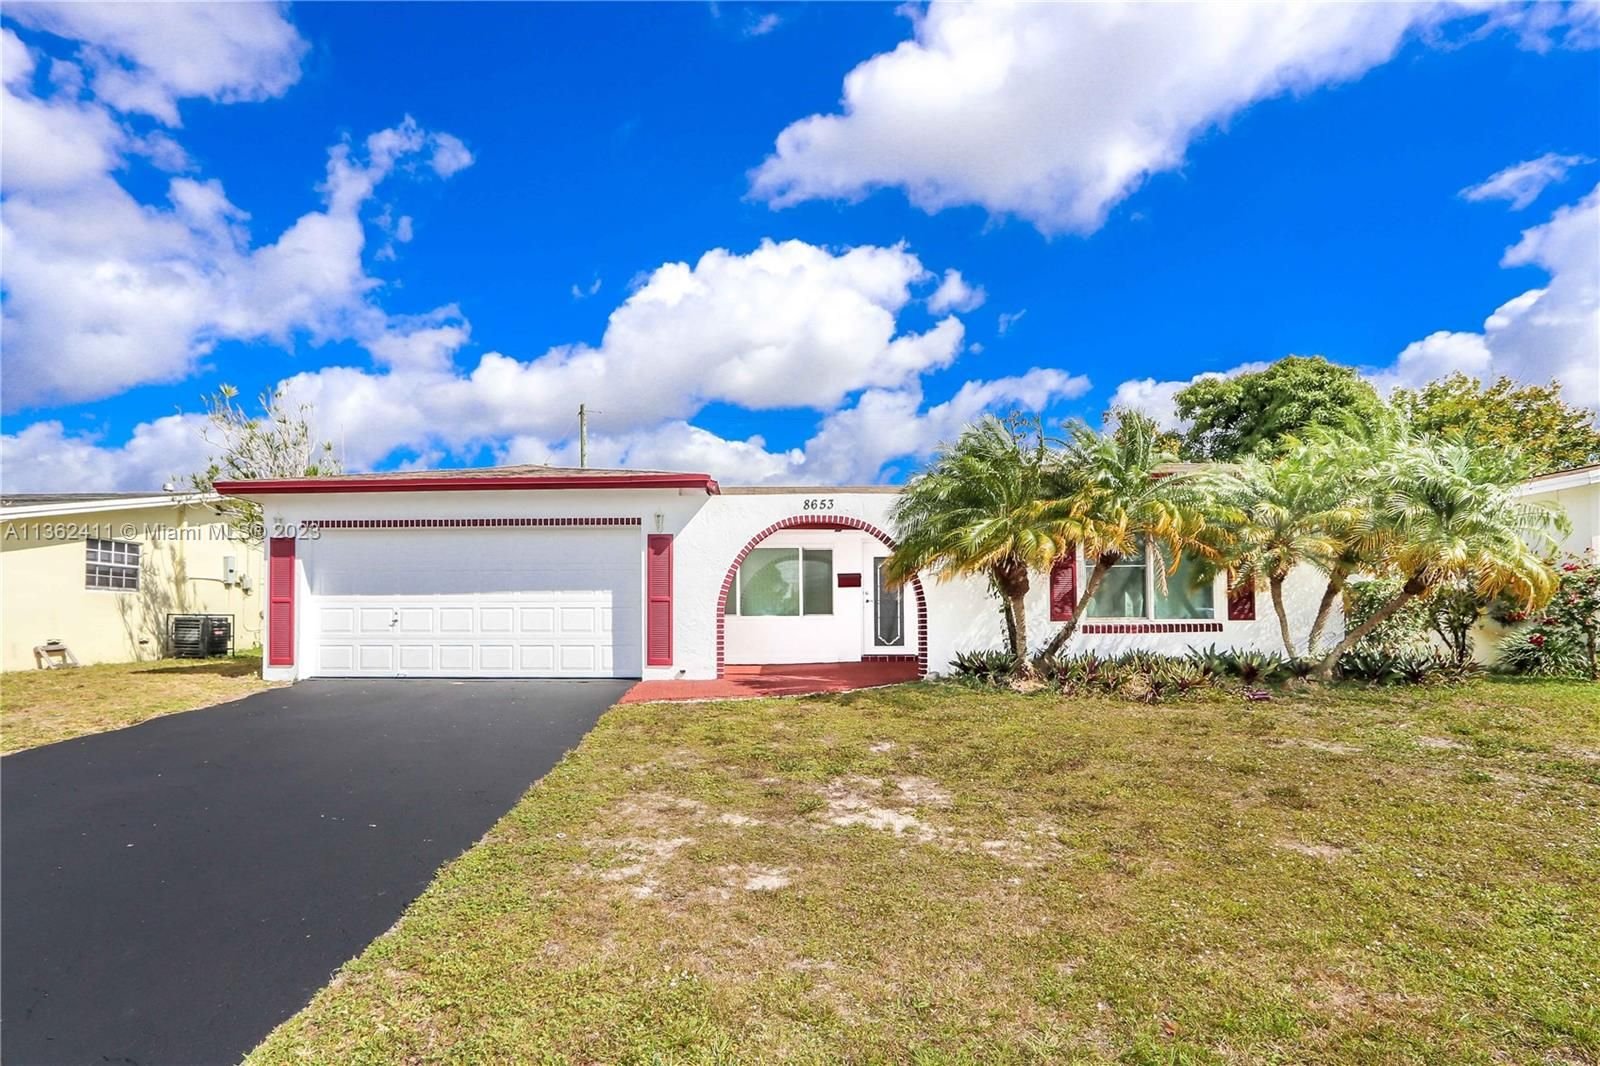 Real estate property located at 8653 Sheraton Dr, Broward County, Miramar, FL